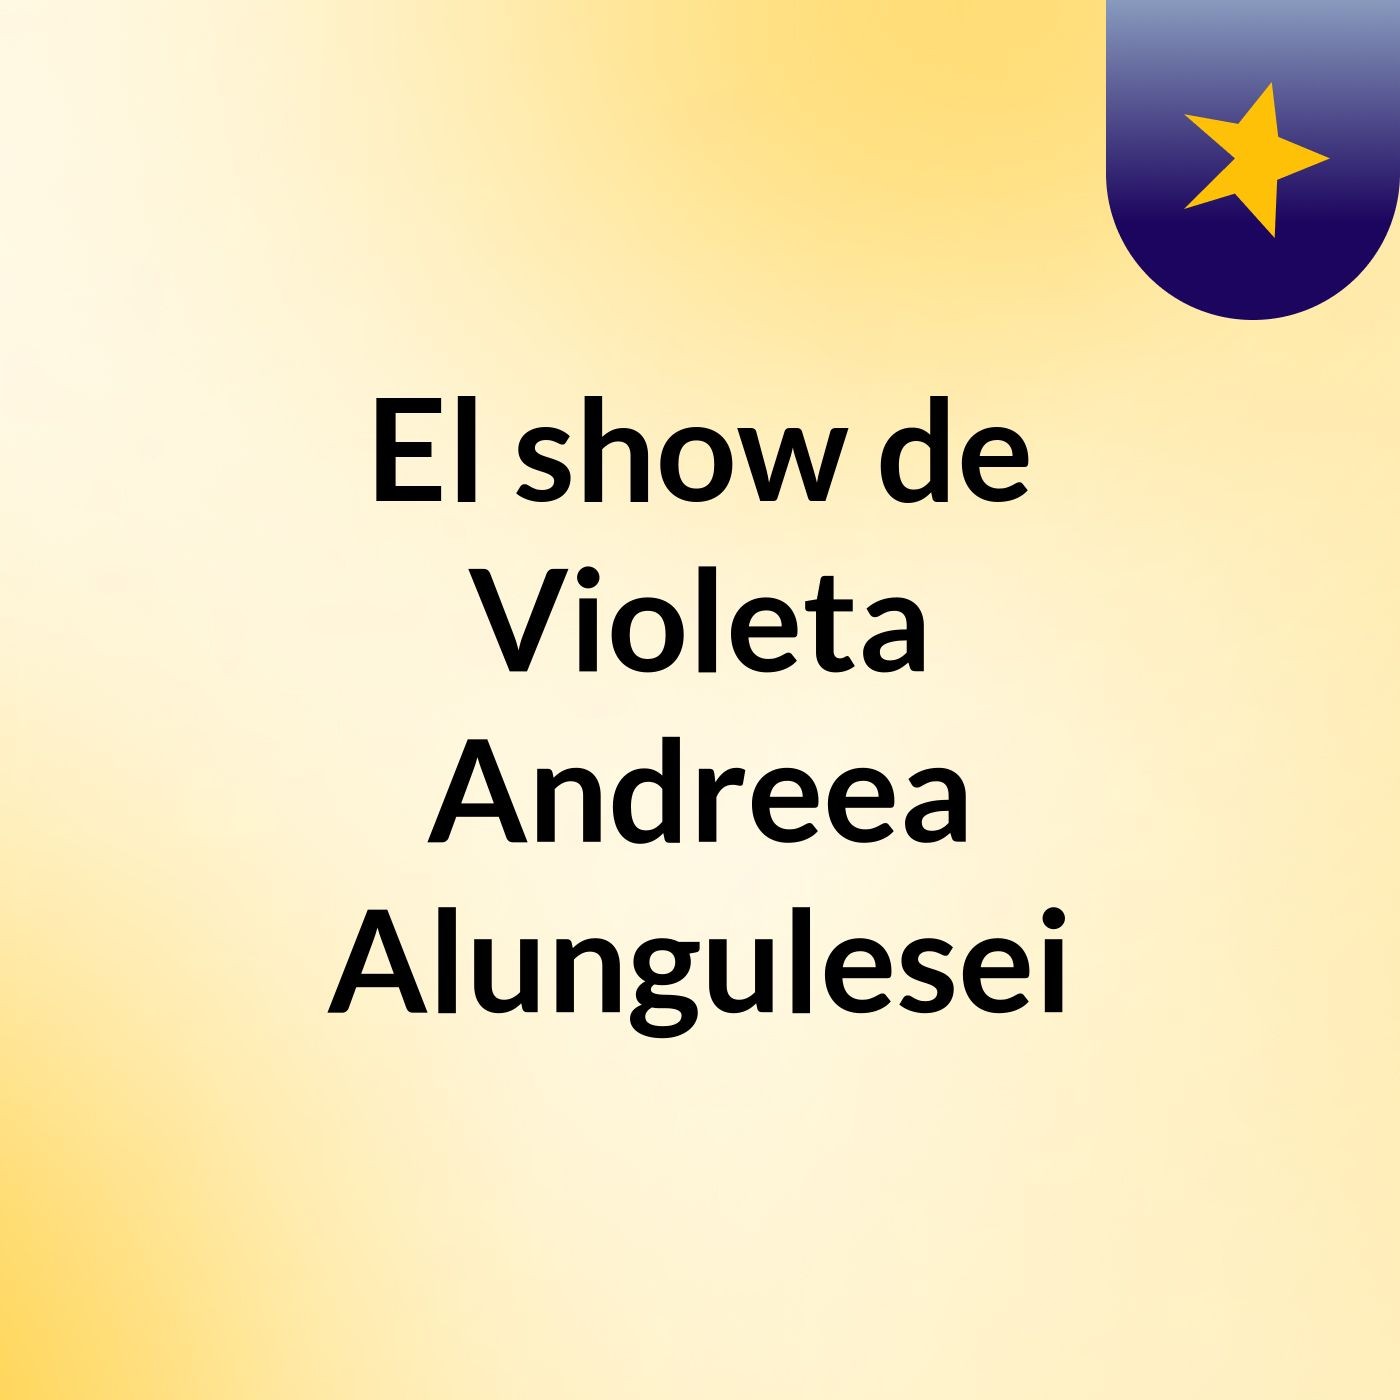 El show de Violeta Andreea Alungulesei